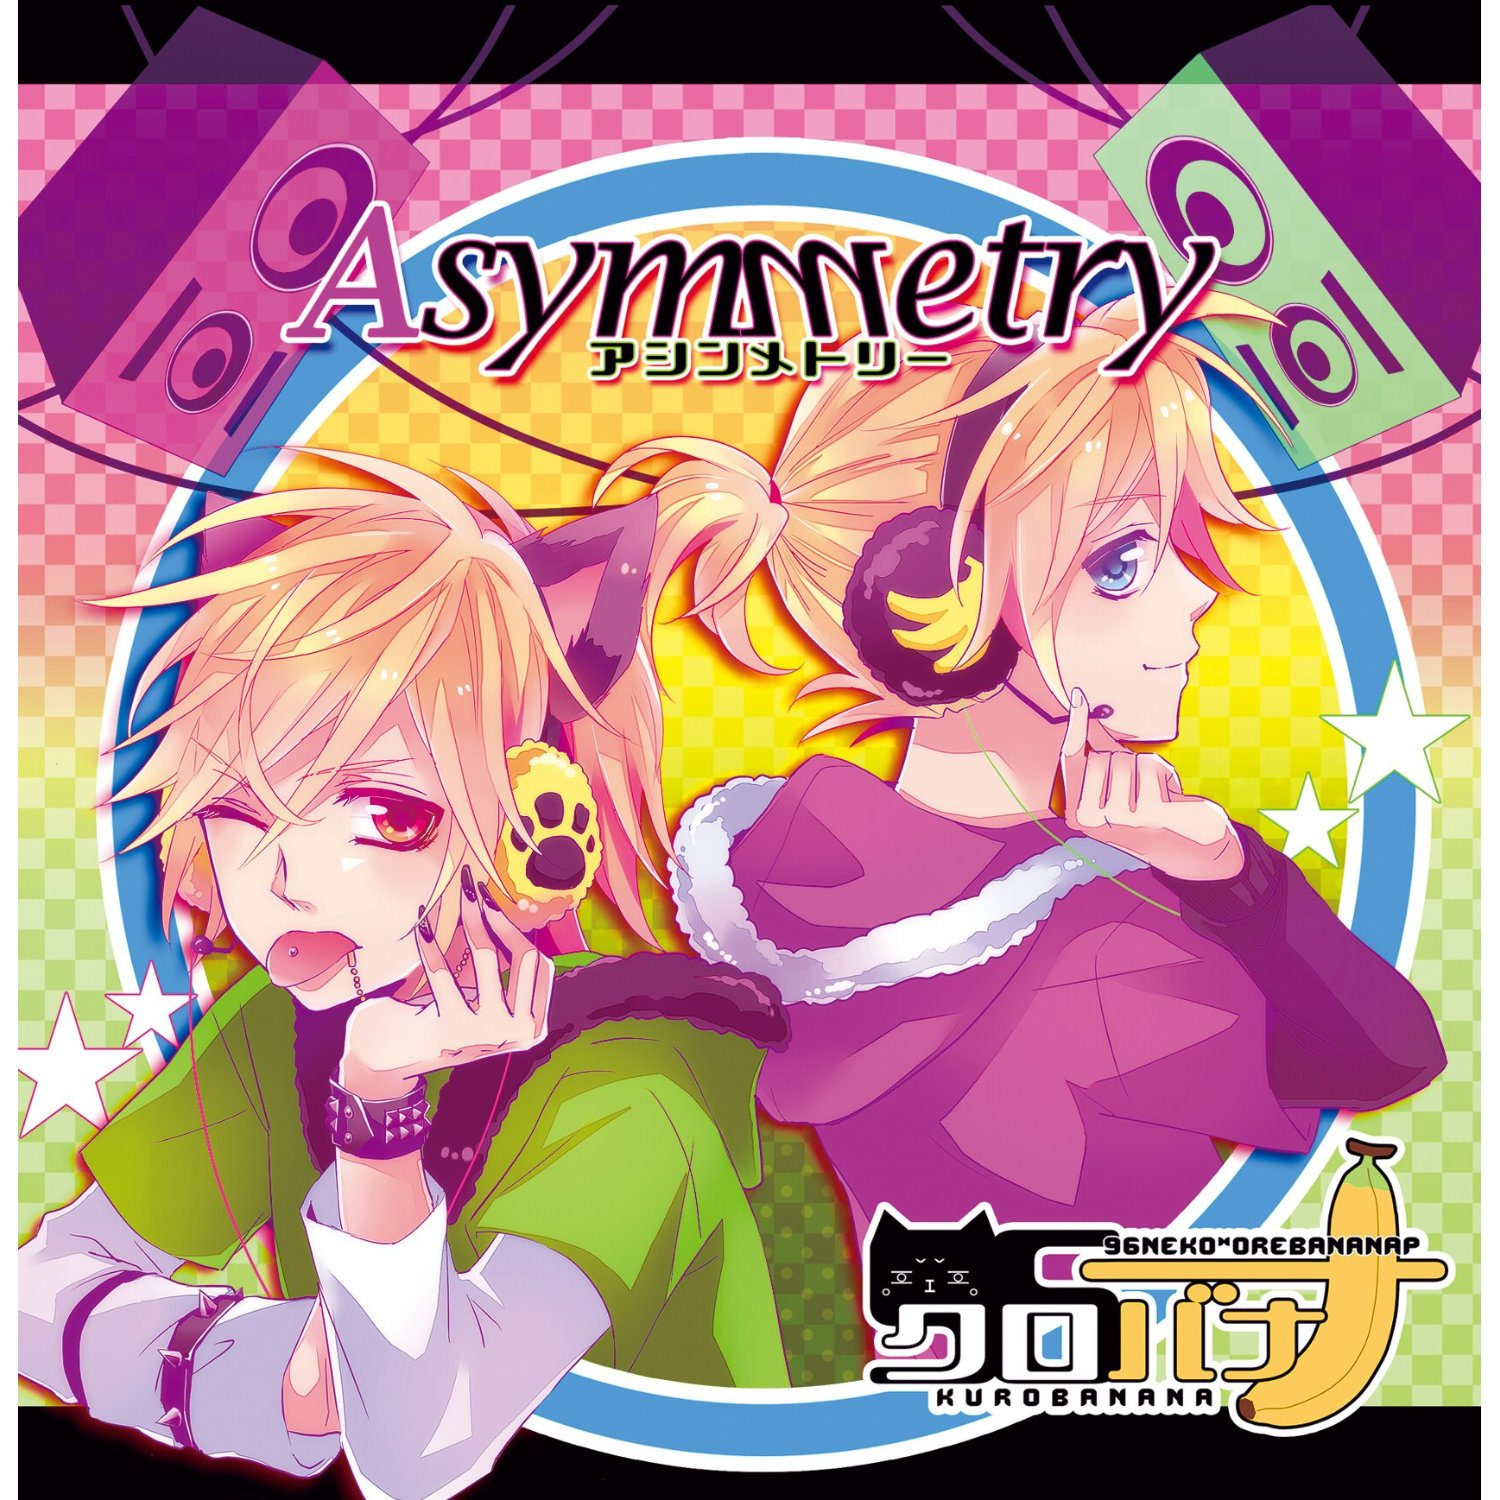 Asymmetry - ギガP, おればななP, 96バナナ feat. various - Vocaloid 